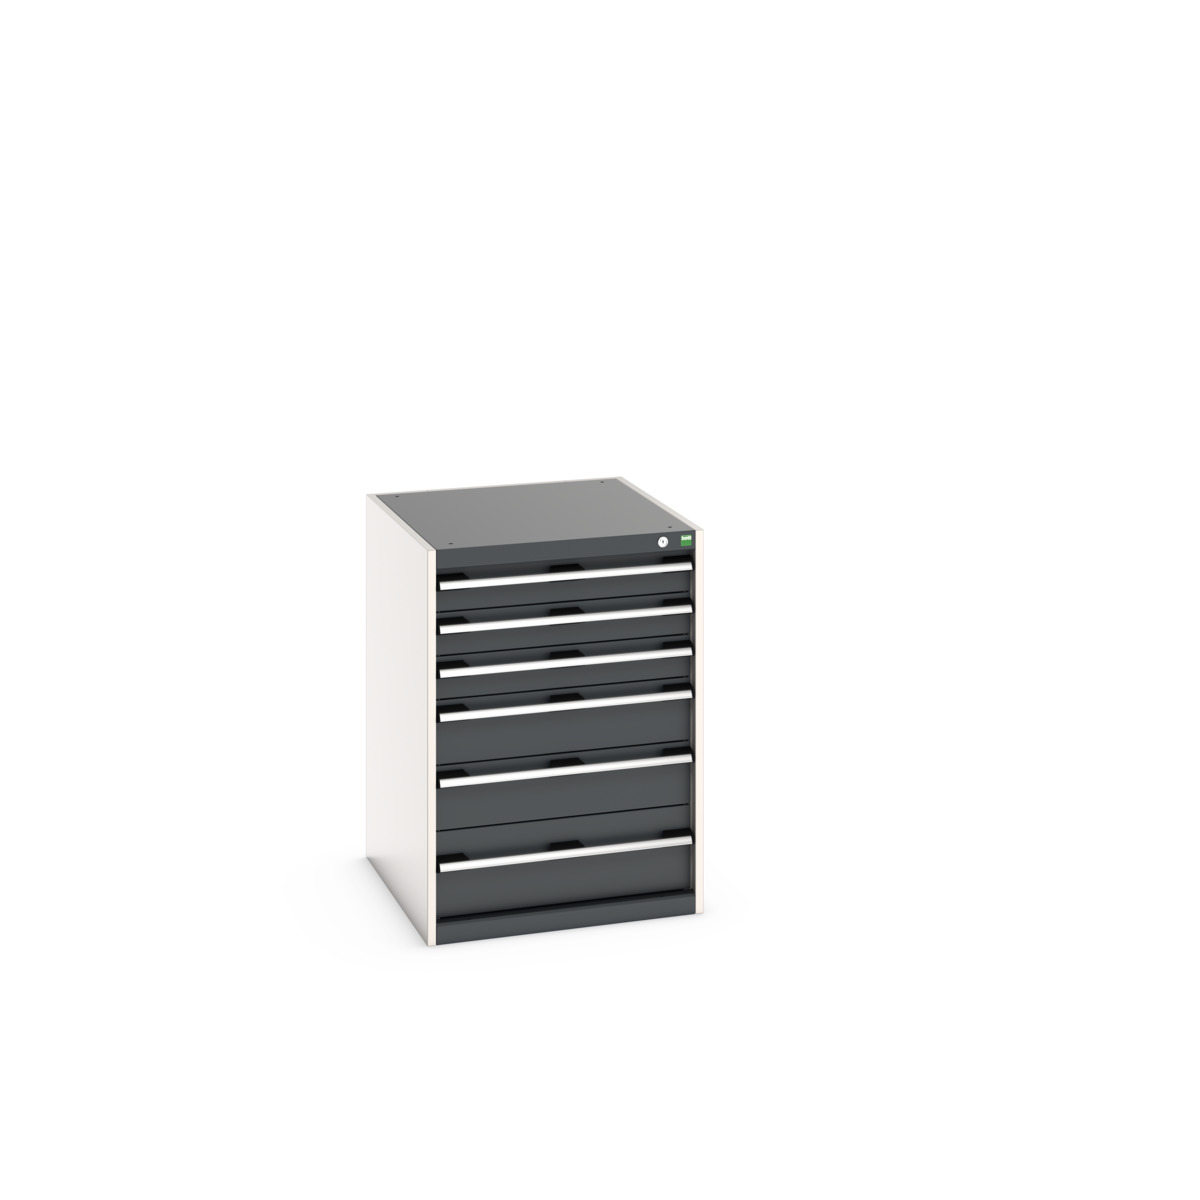 40027088. - cubio drawer cabinet 